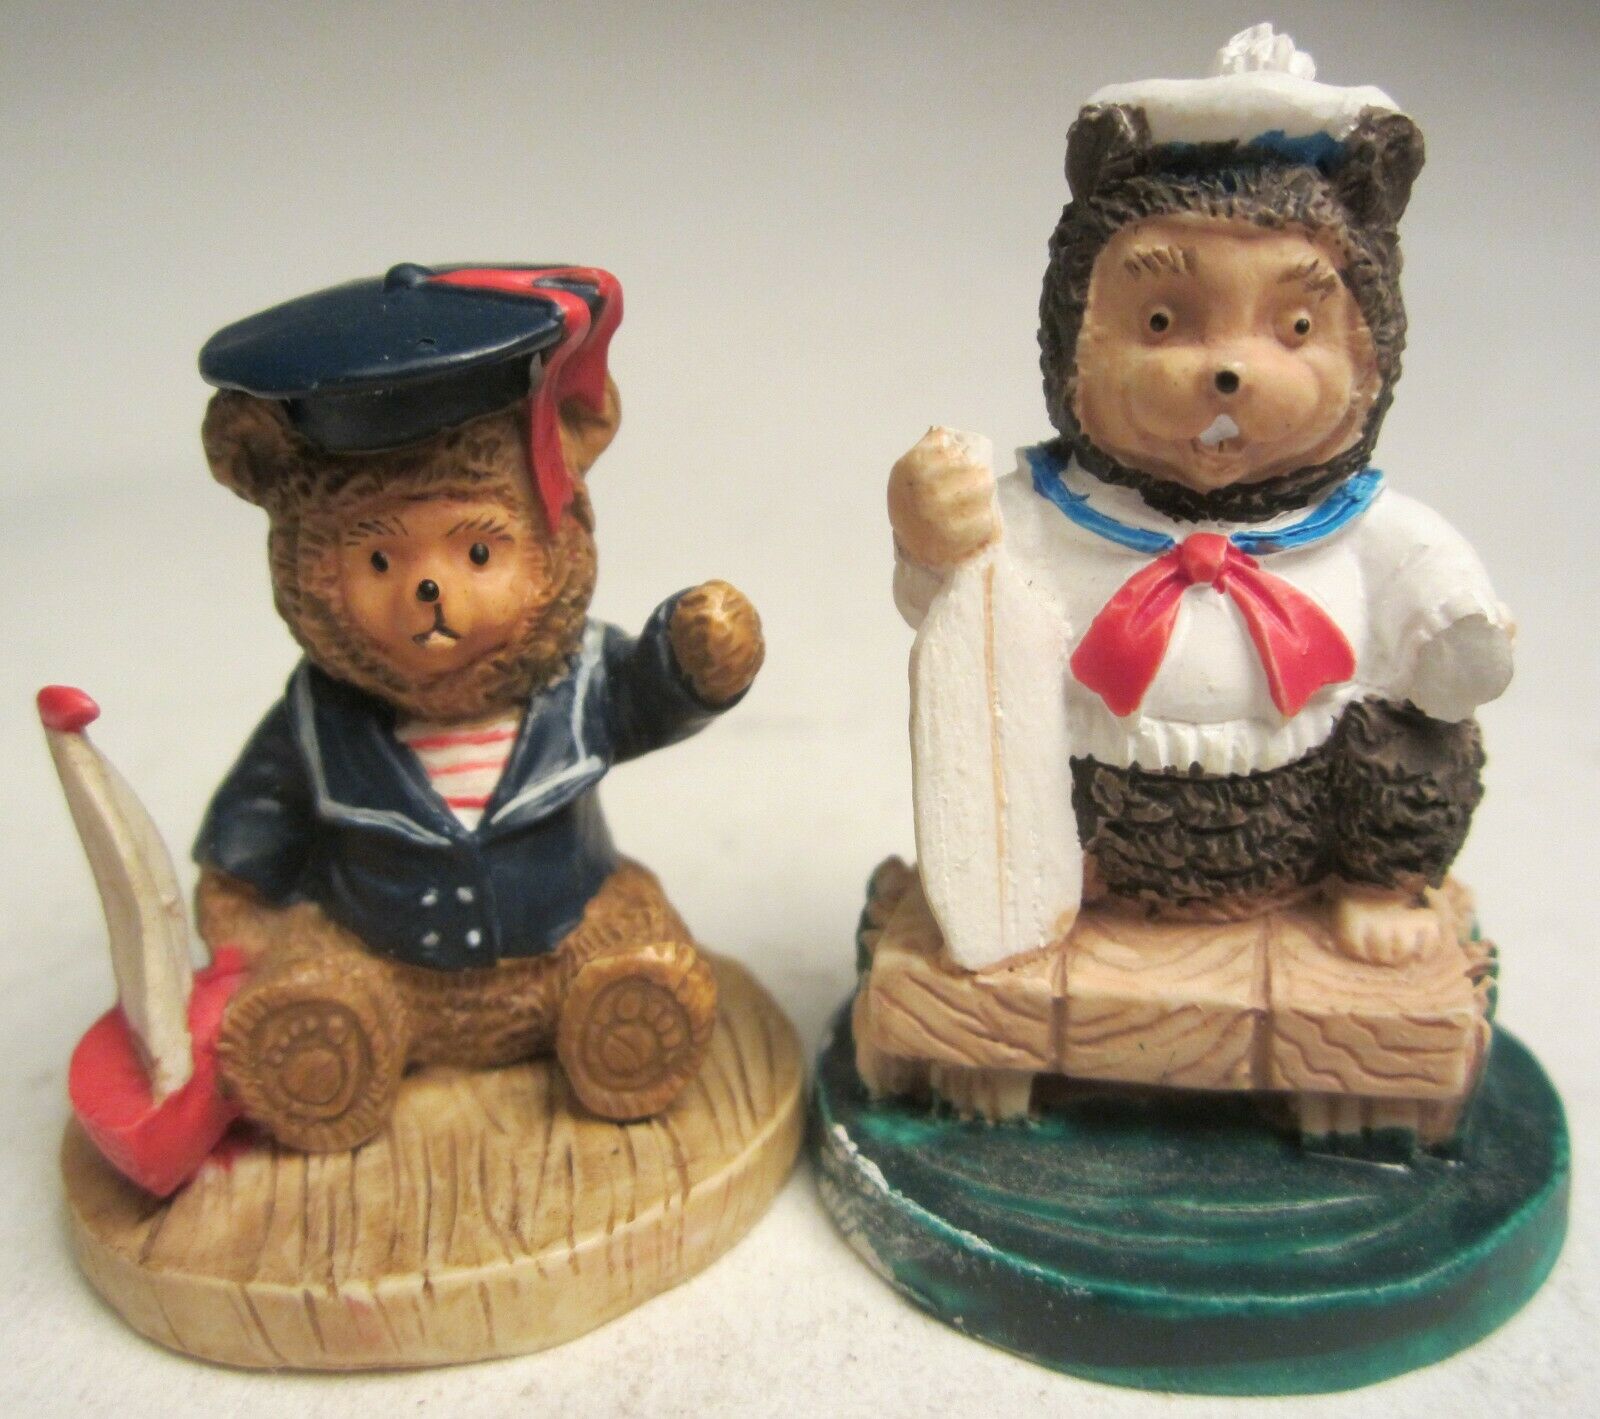 Robert Raikes Miniature Bears 2 Kids Dressed Up In Sailor Outfits Acrylic Resin